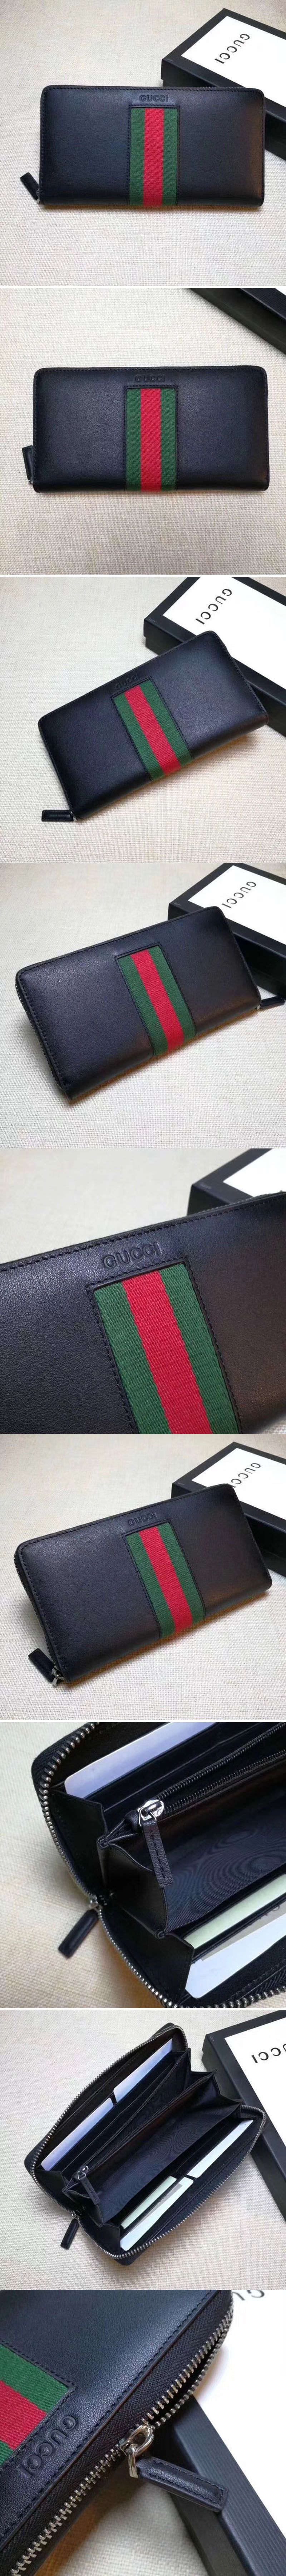 Replica Gucci 408831 Black Leather zip around wallet